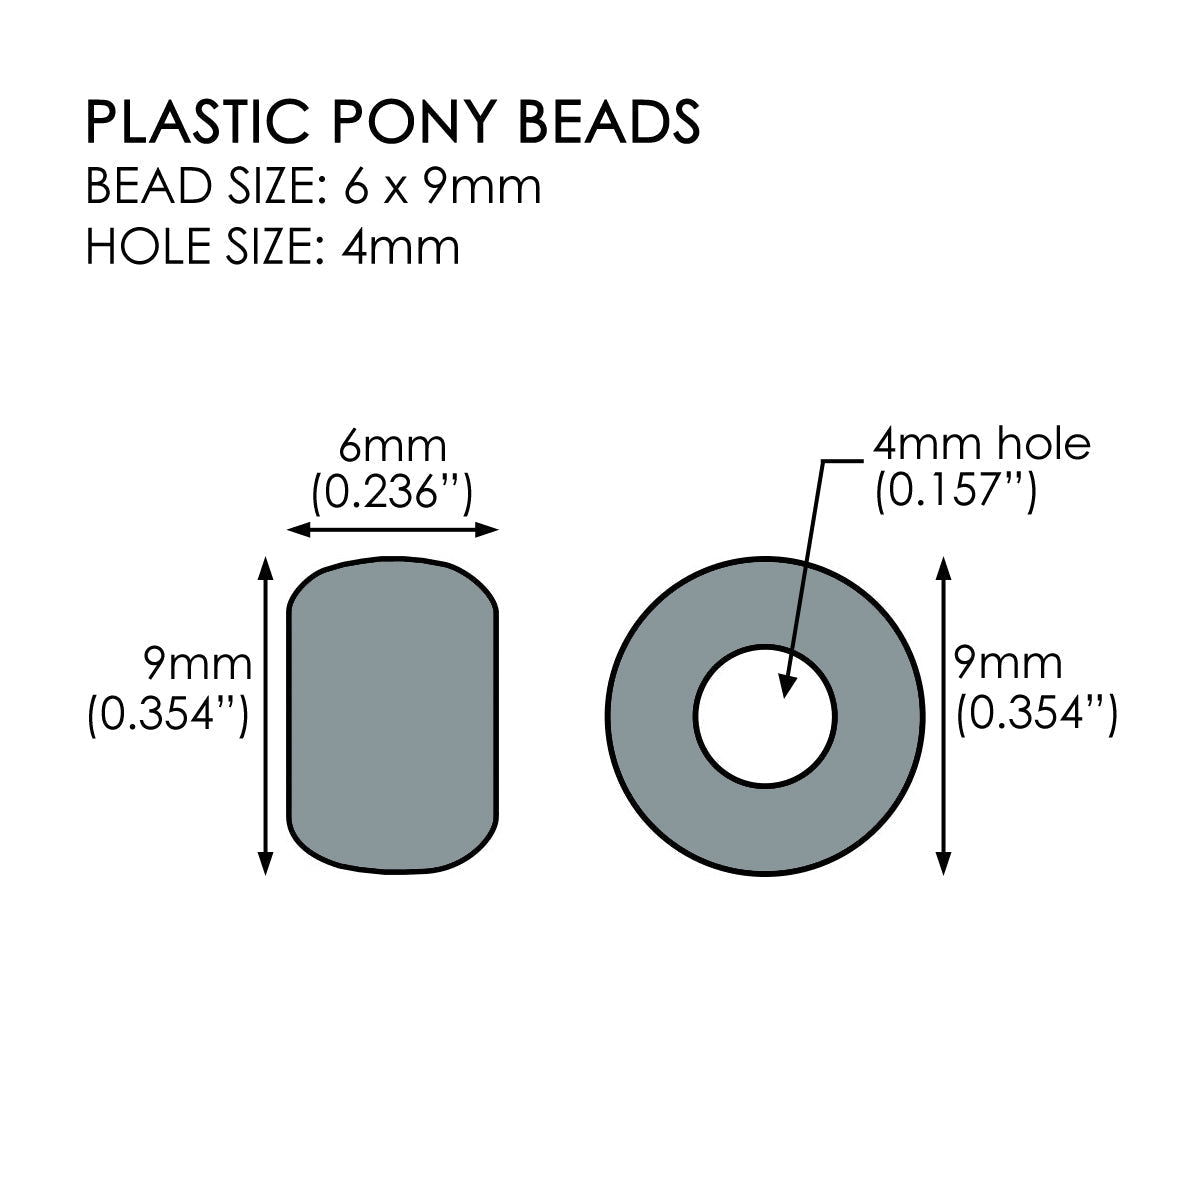 Jet Black w/ Glitter Plastic Craft Pony Beads 6x9mm Bulk, Made in